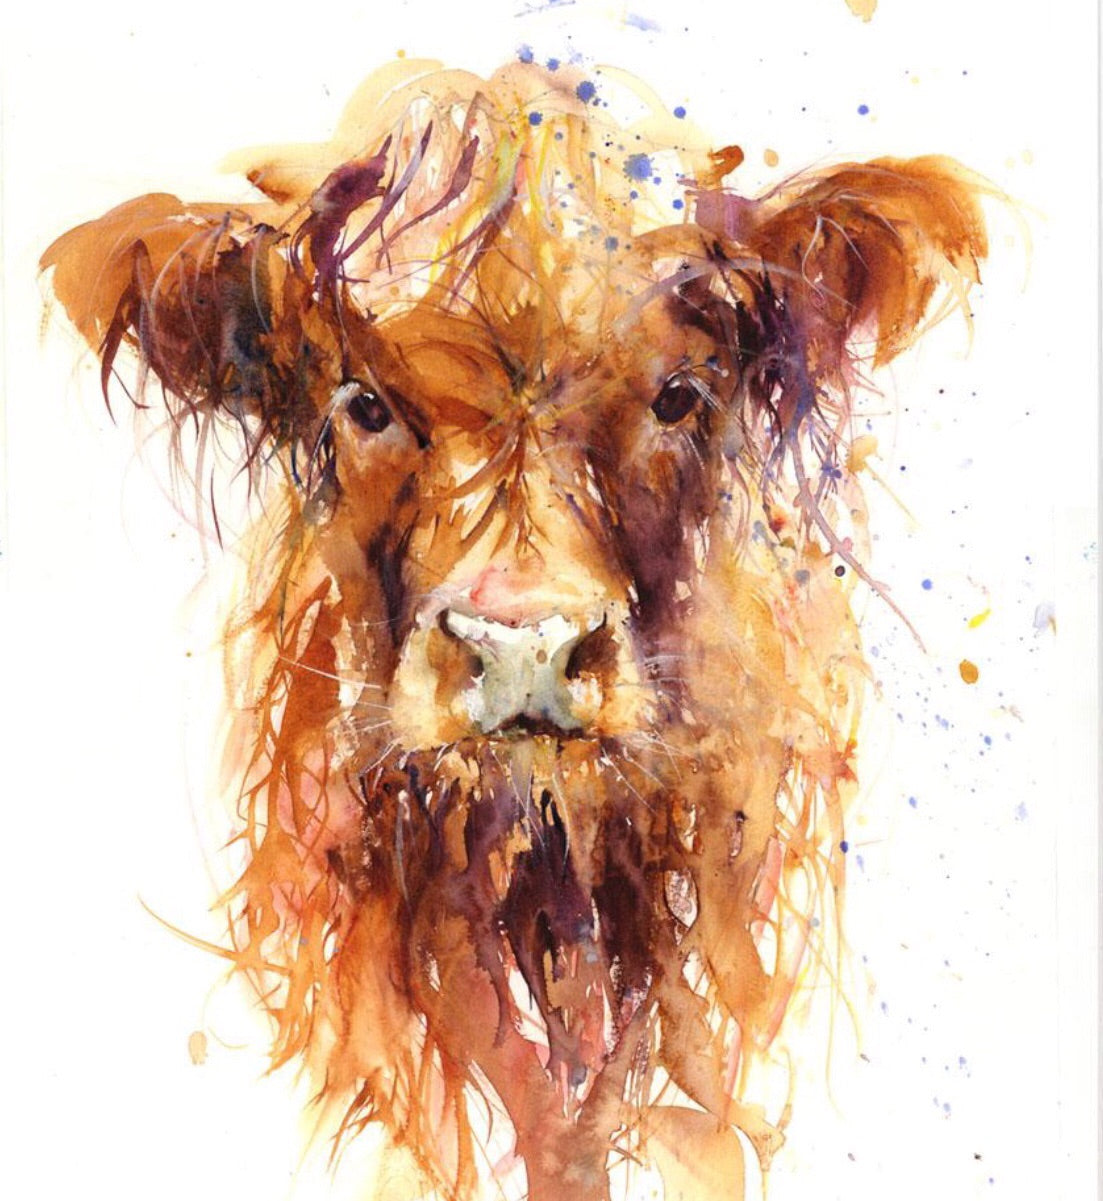 Highland Cow/calf limited edition print - Jen Buckley Art limited edition animal art prints